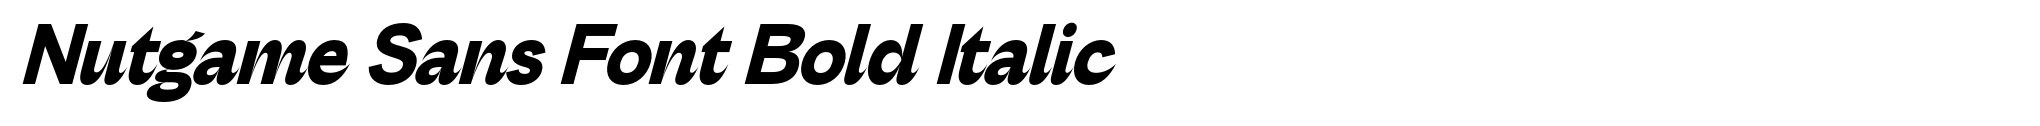 Nutgame Sans Font Bold Italic image